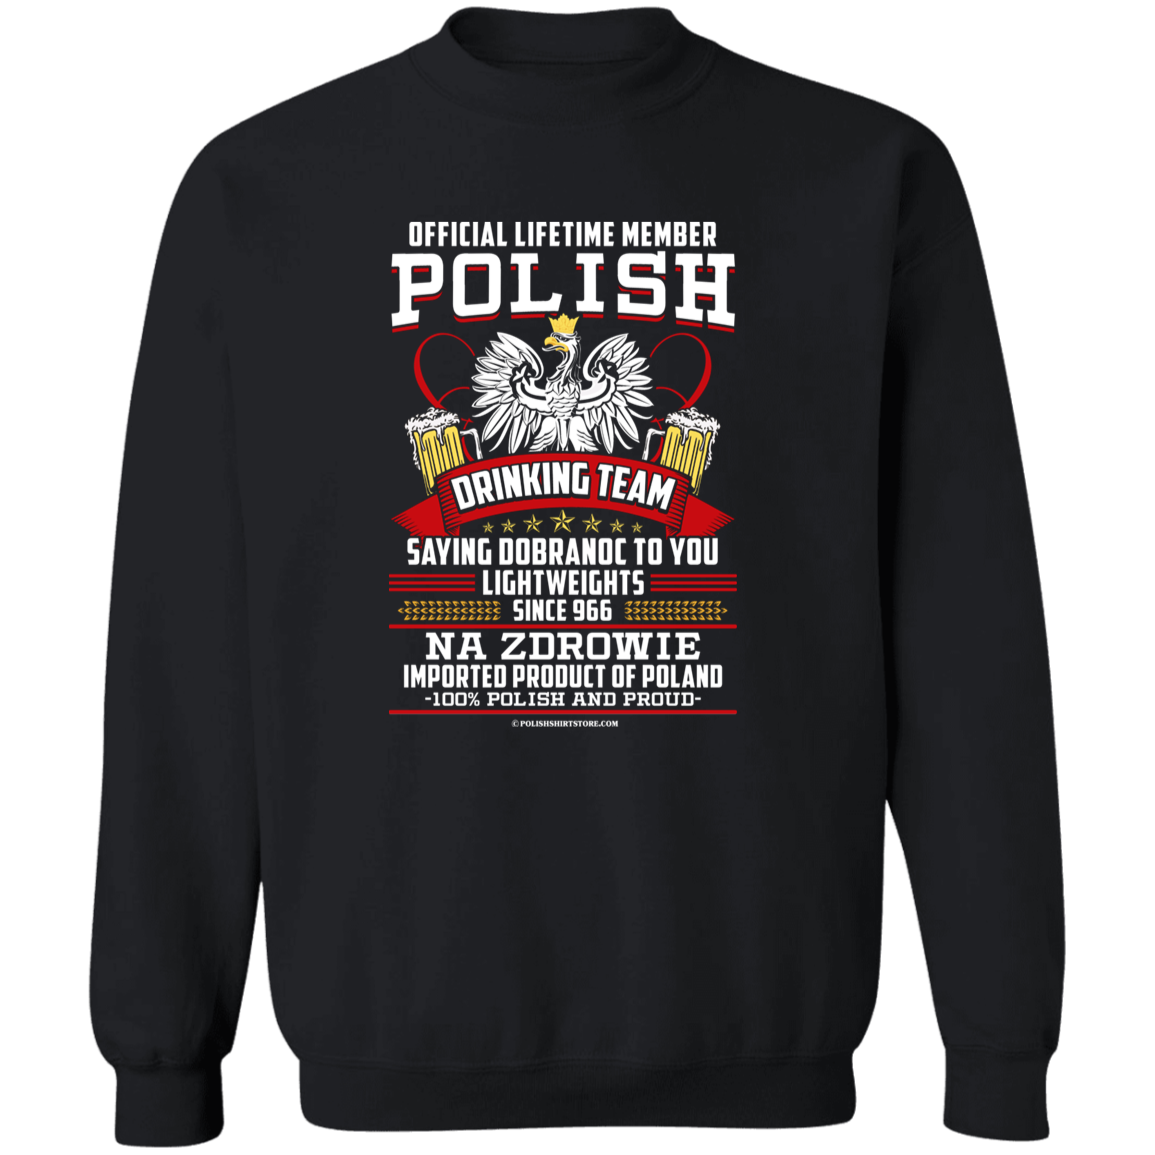 Polish Drinking Team Saying Dobranoc To You Lightweights Since 966 Apparel CustomCat G180 Crewneck Pullover Sweatshirt Black S